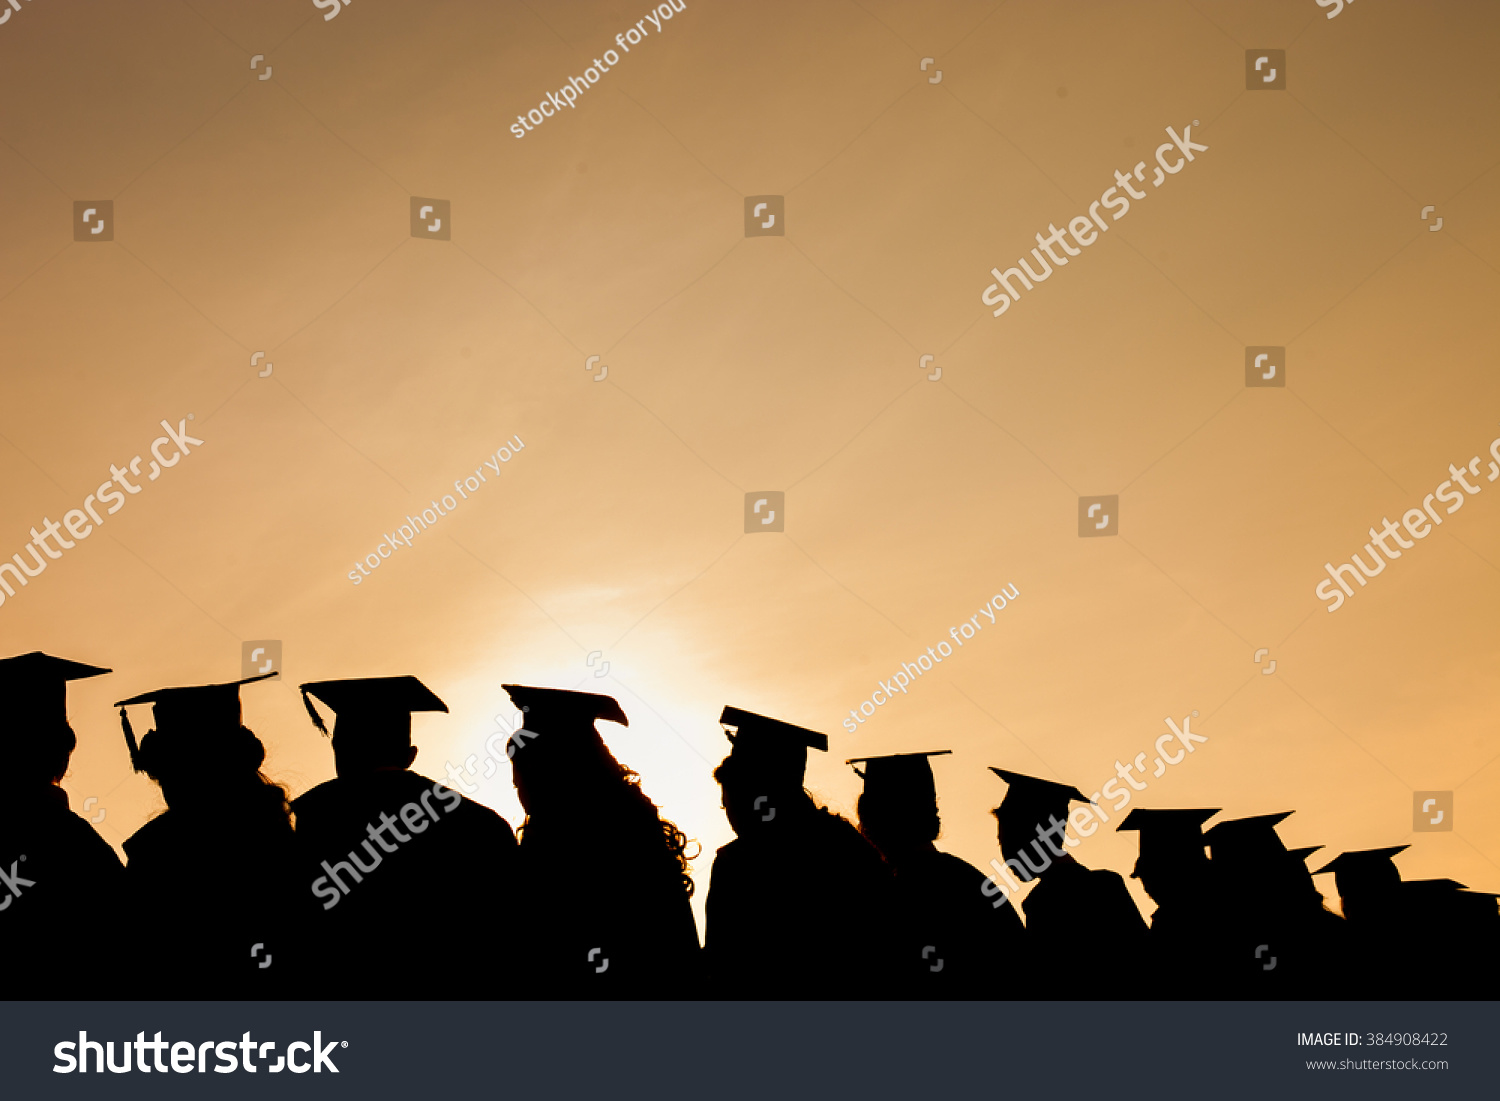 Education Graduation with sunset sky background #384908422